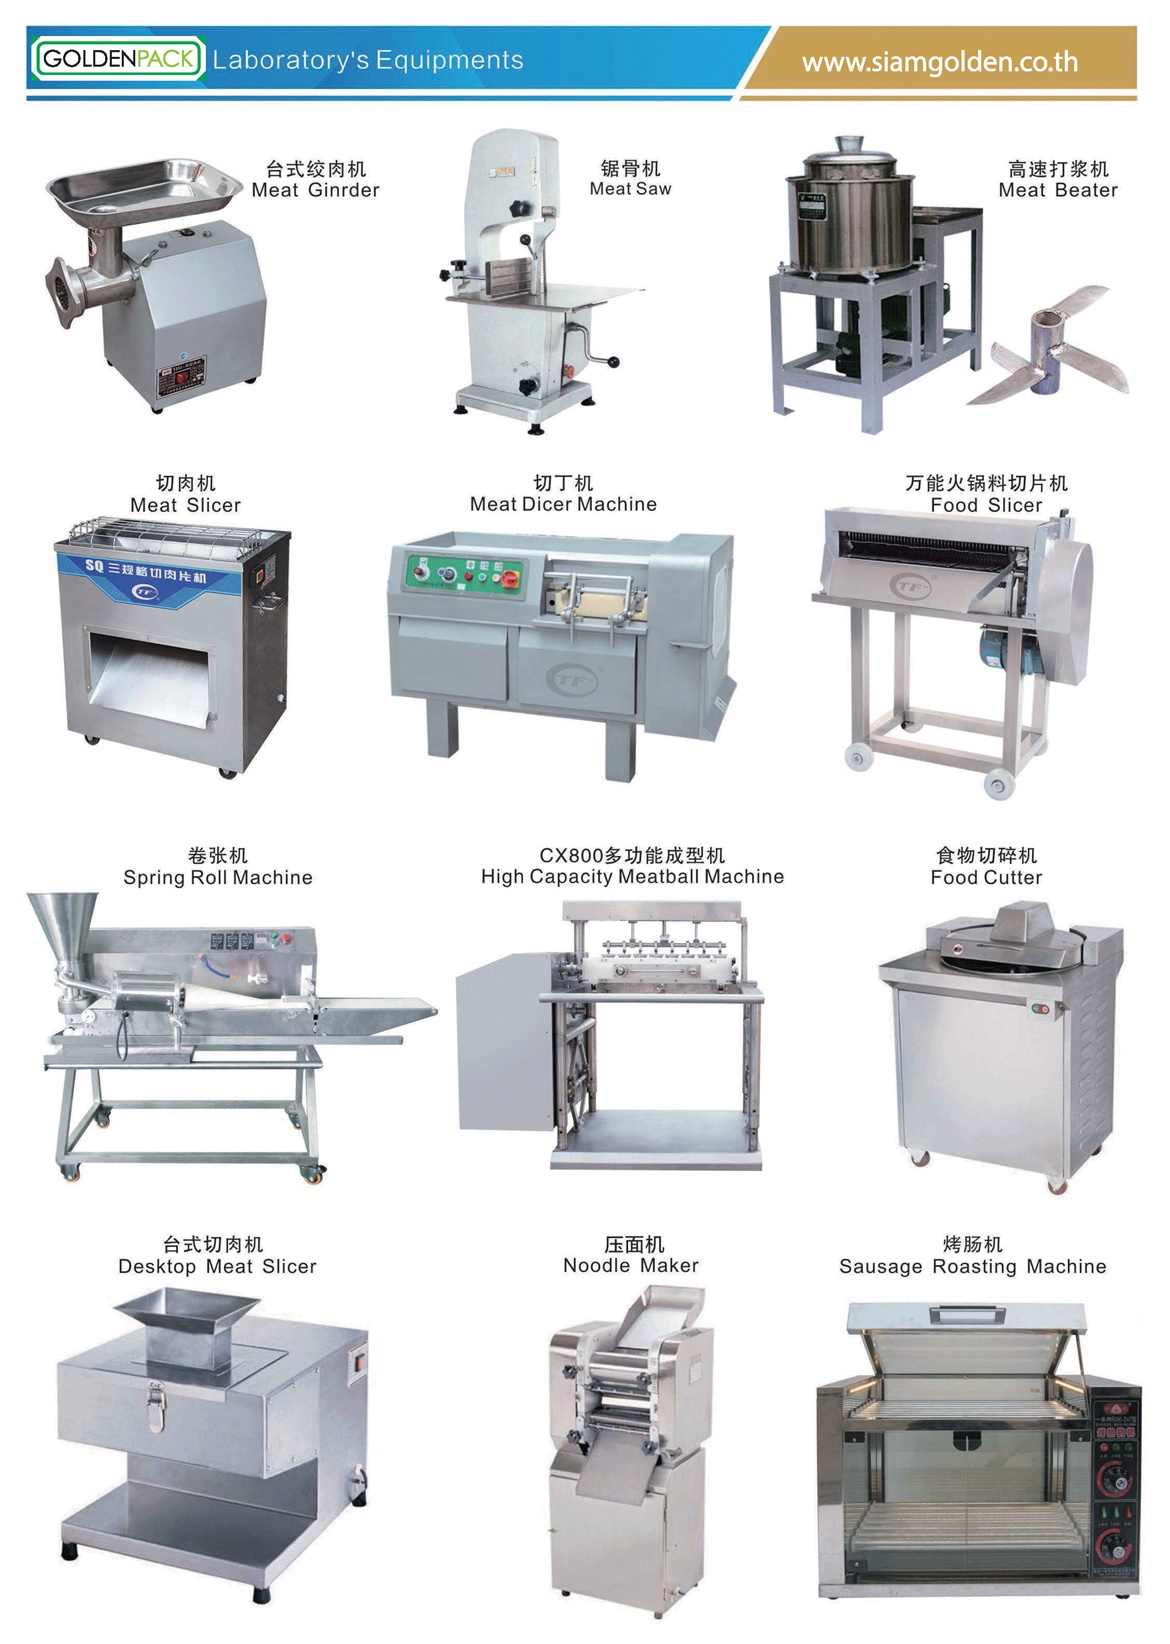 Food Laboratory Equipments